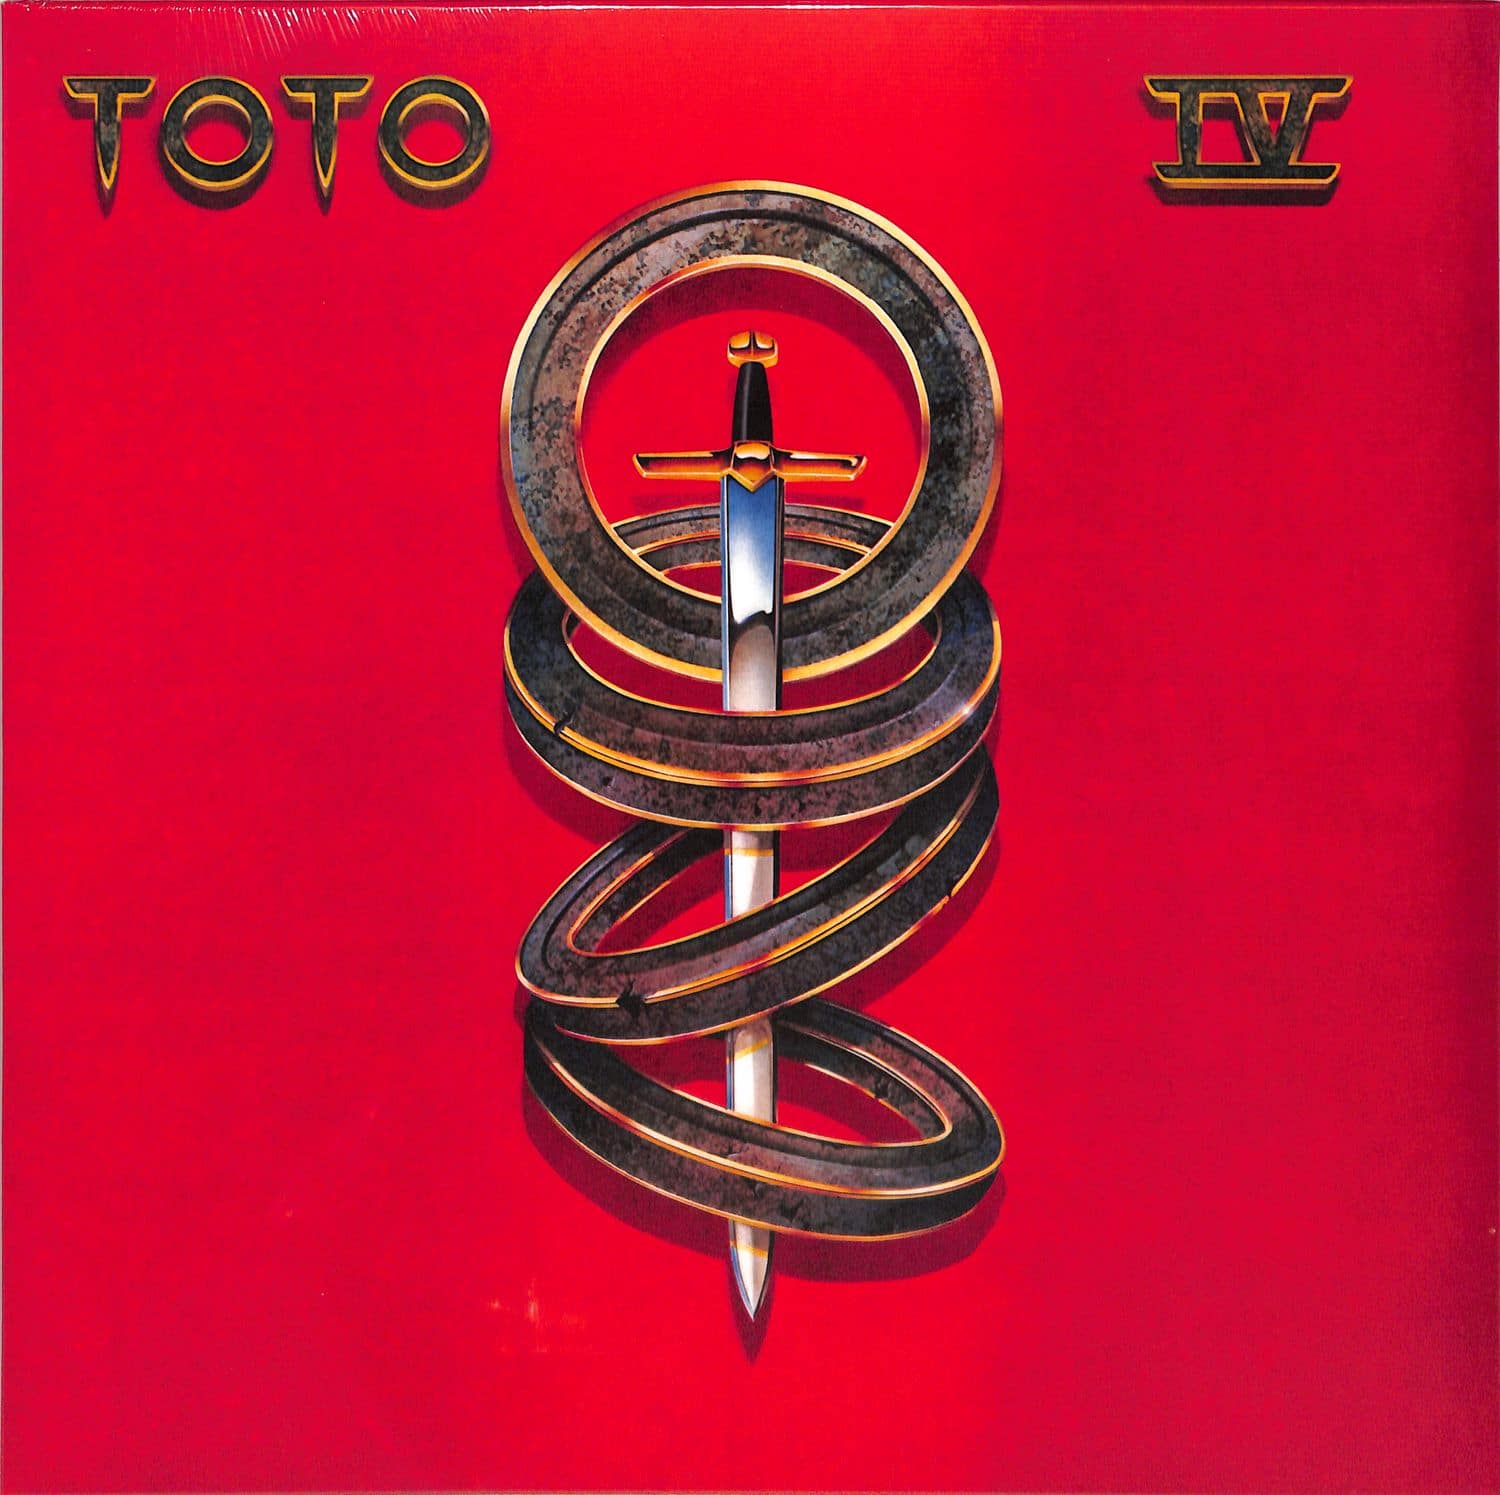 Toto - TOTO IV 